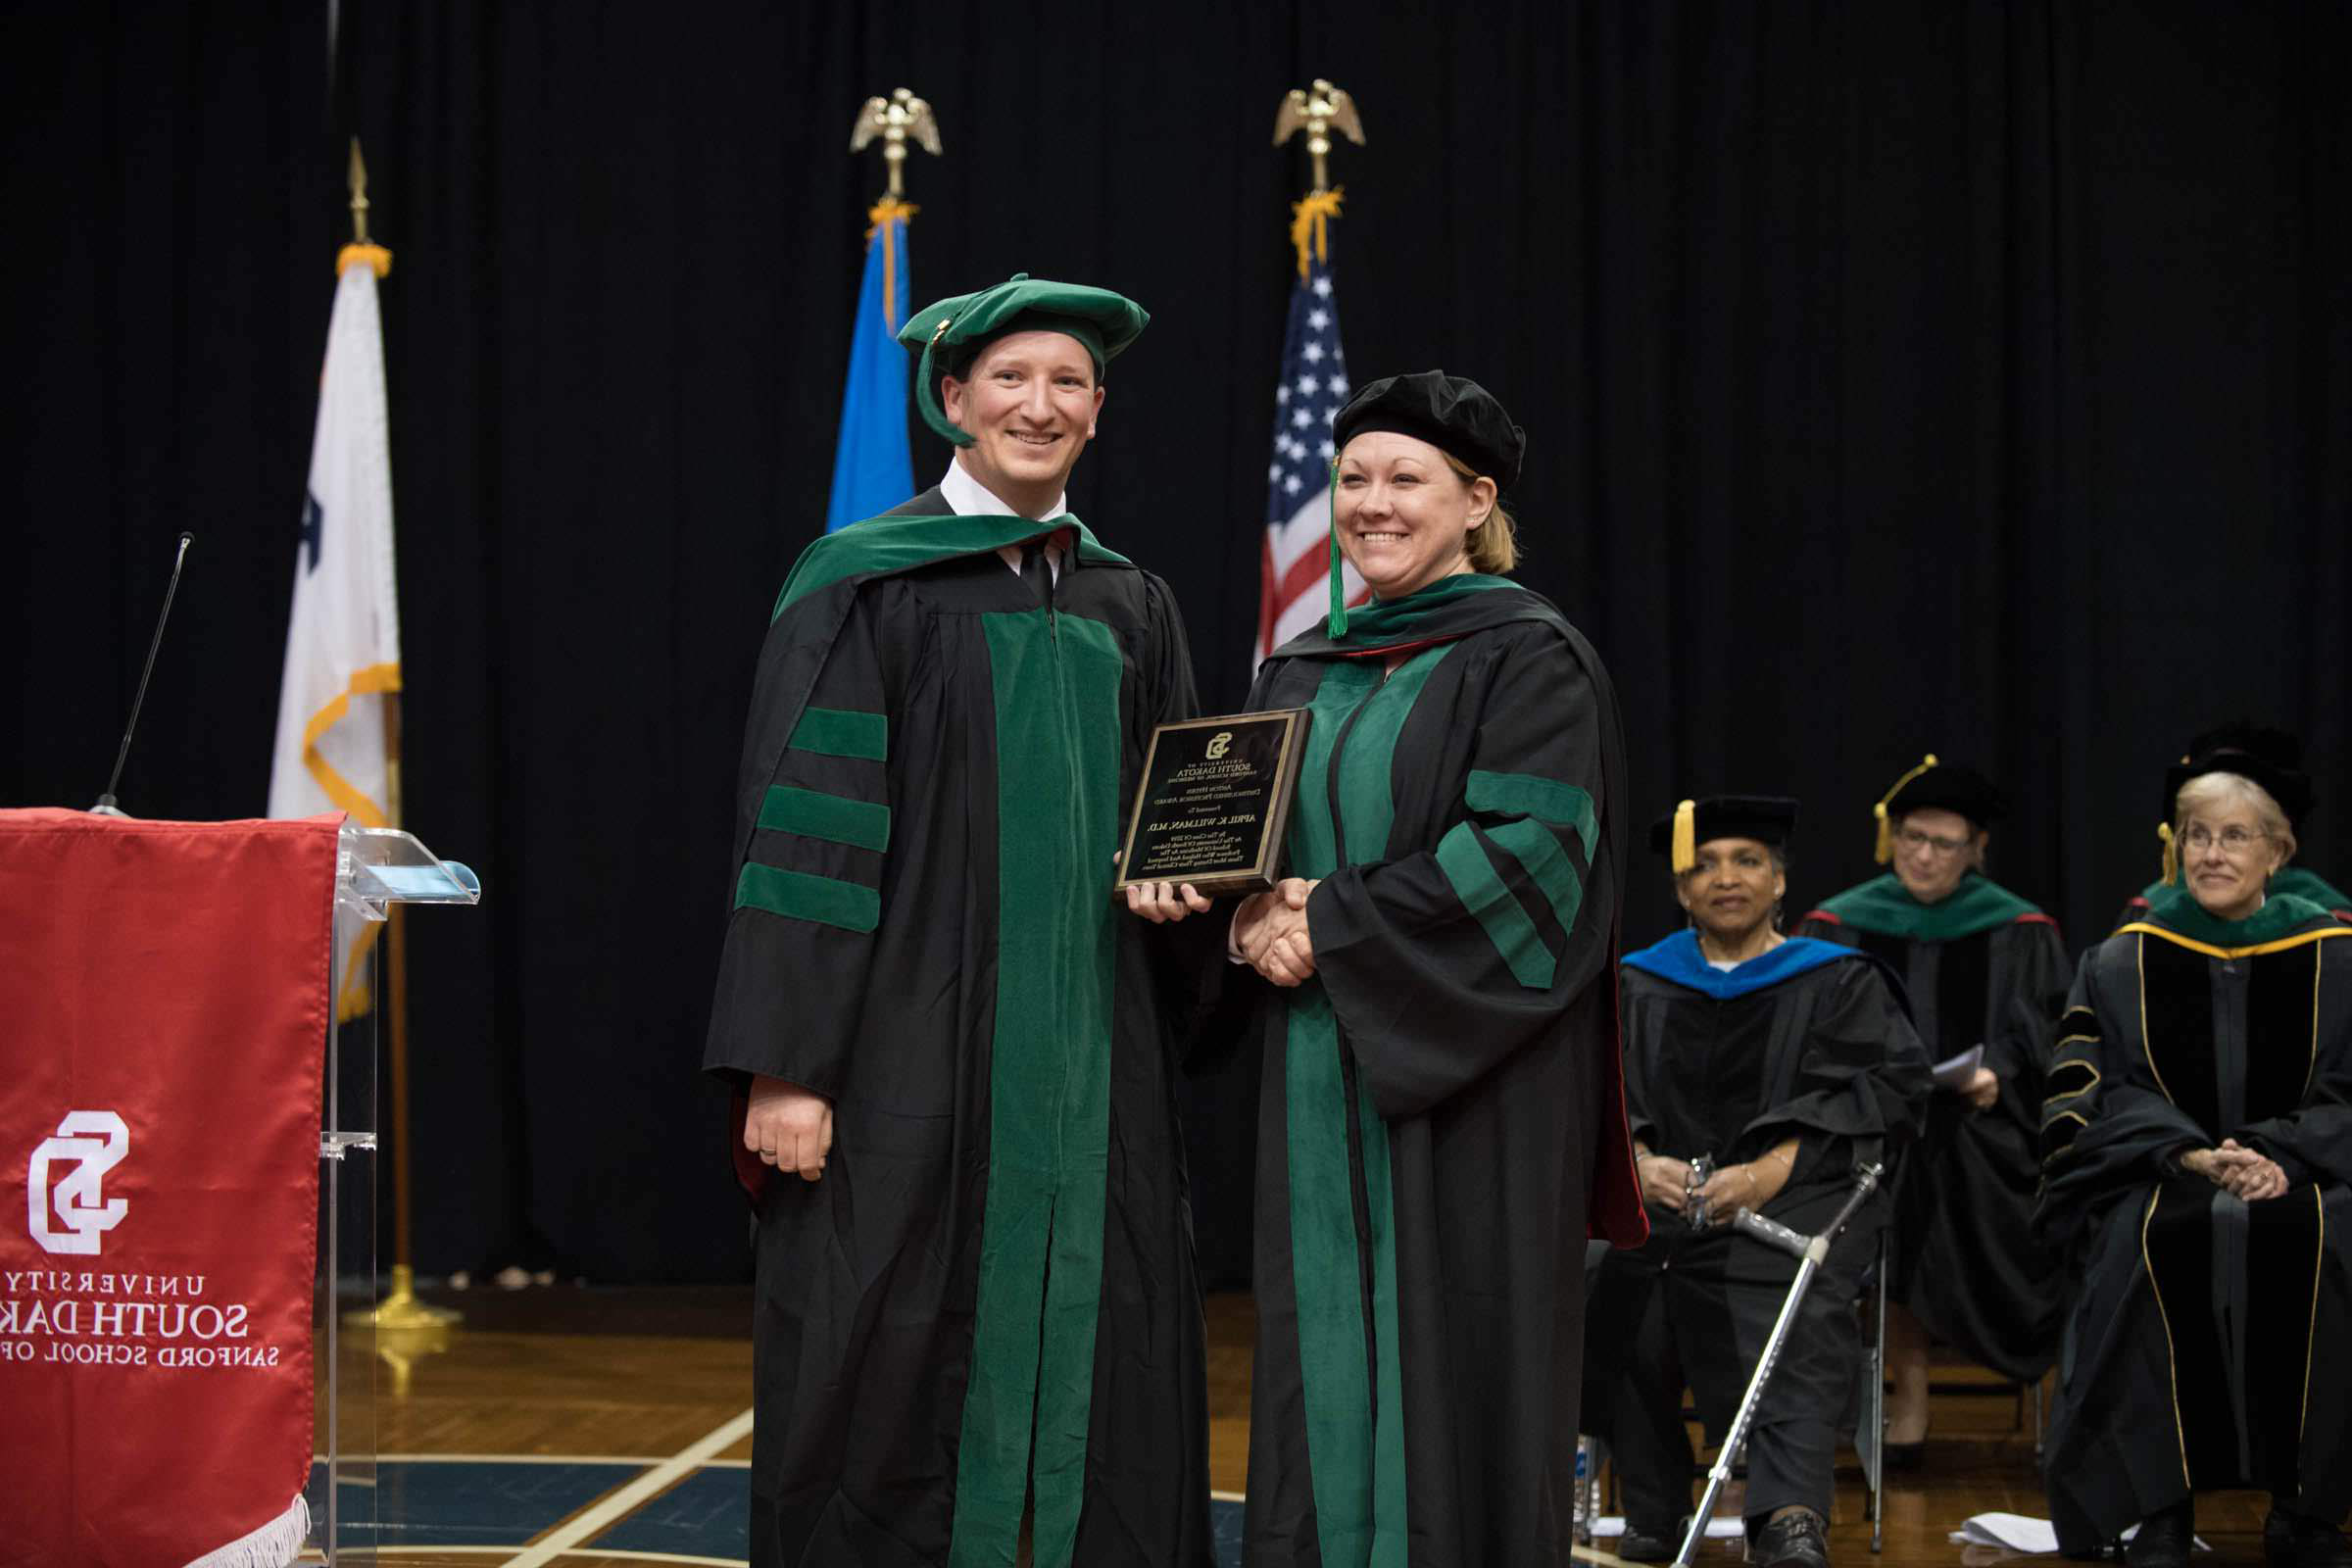 Dr. April Willman Receives USD Sanford School of Medicine Hyden Award